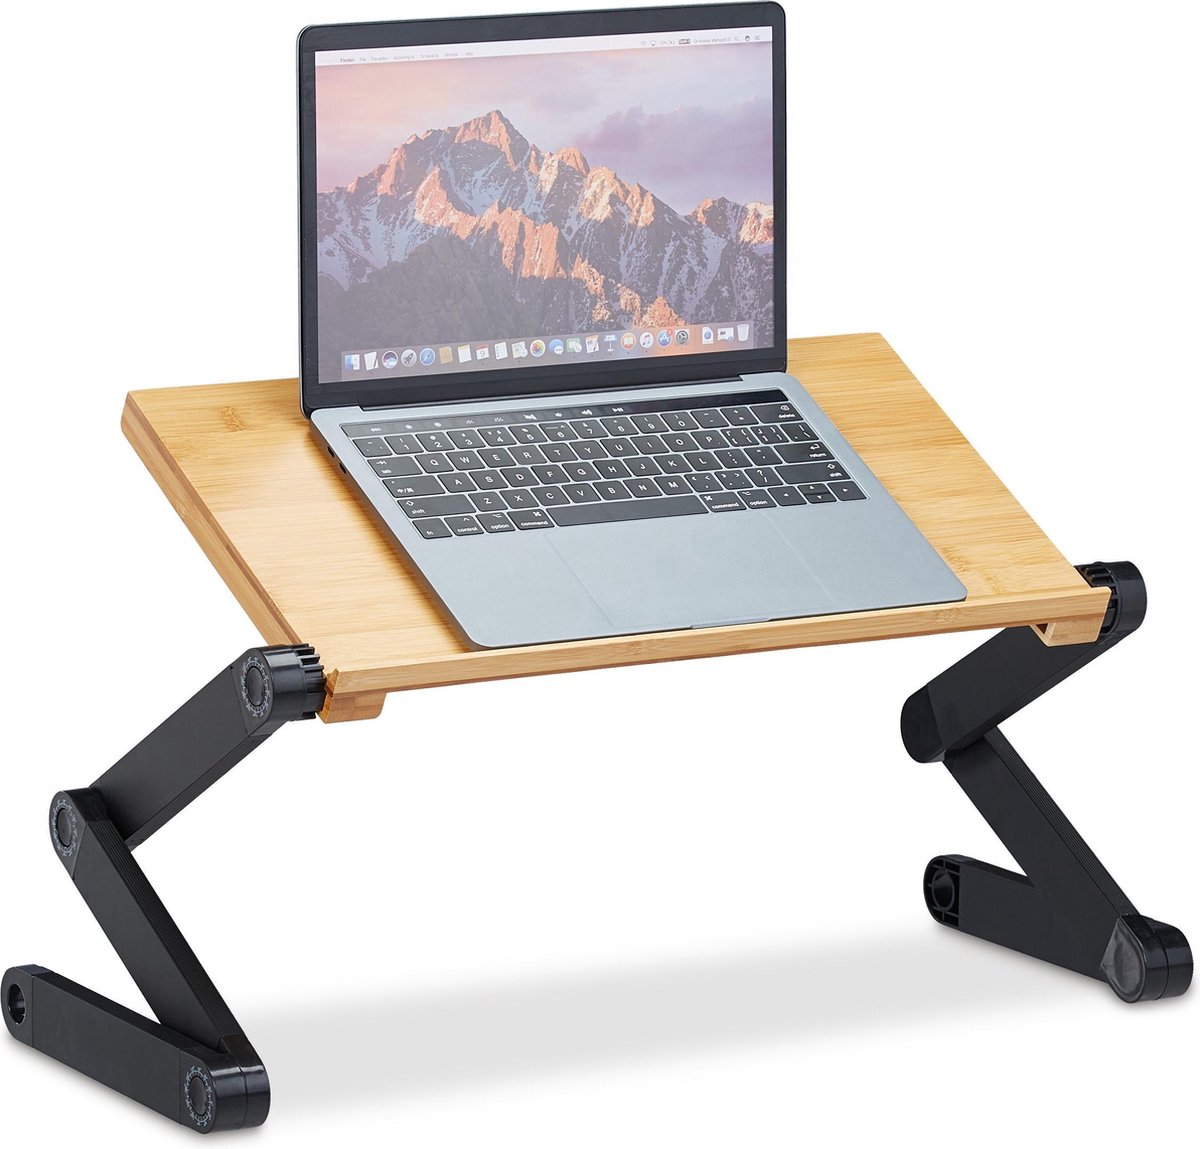 Relaxdays laptopstandaard verstelbaar - bamboe laptoptafel - laptophouder - DJ tafel